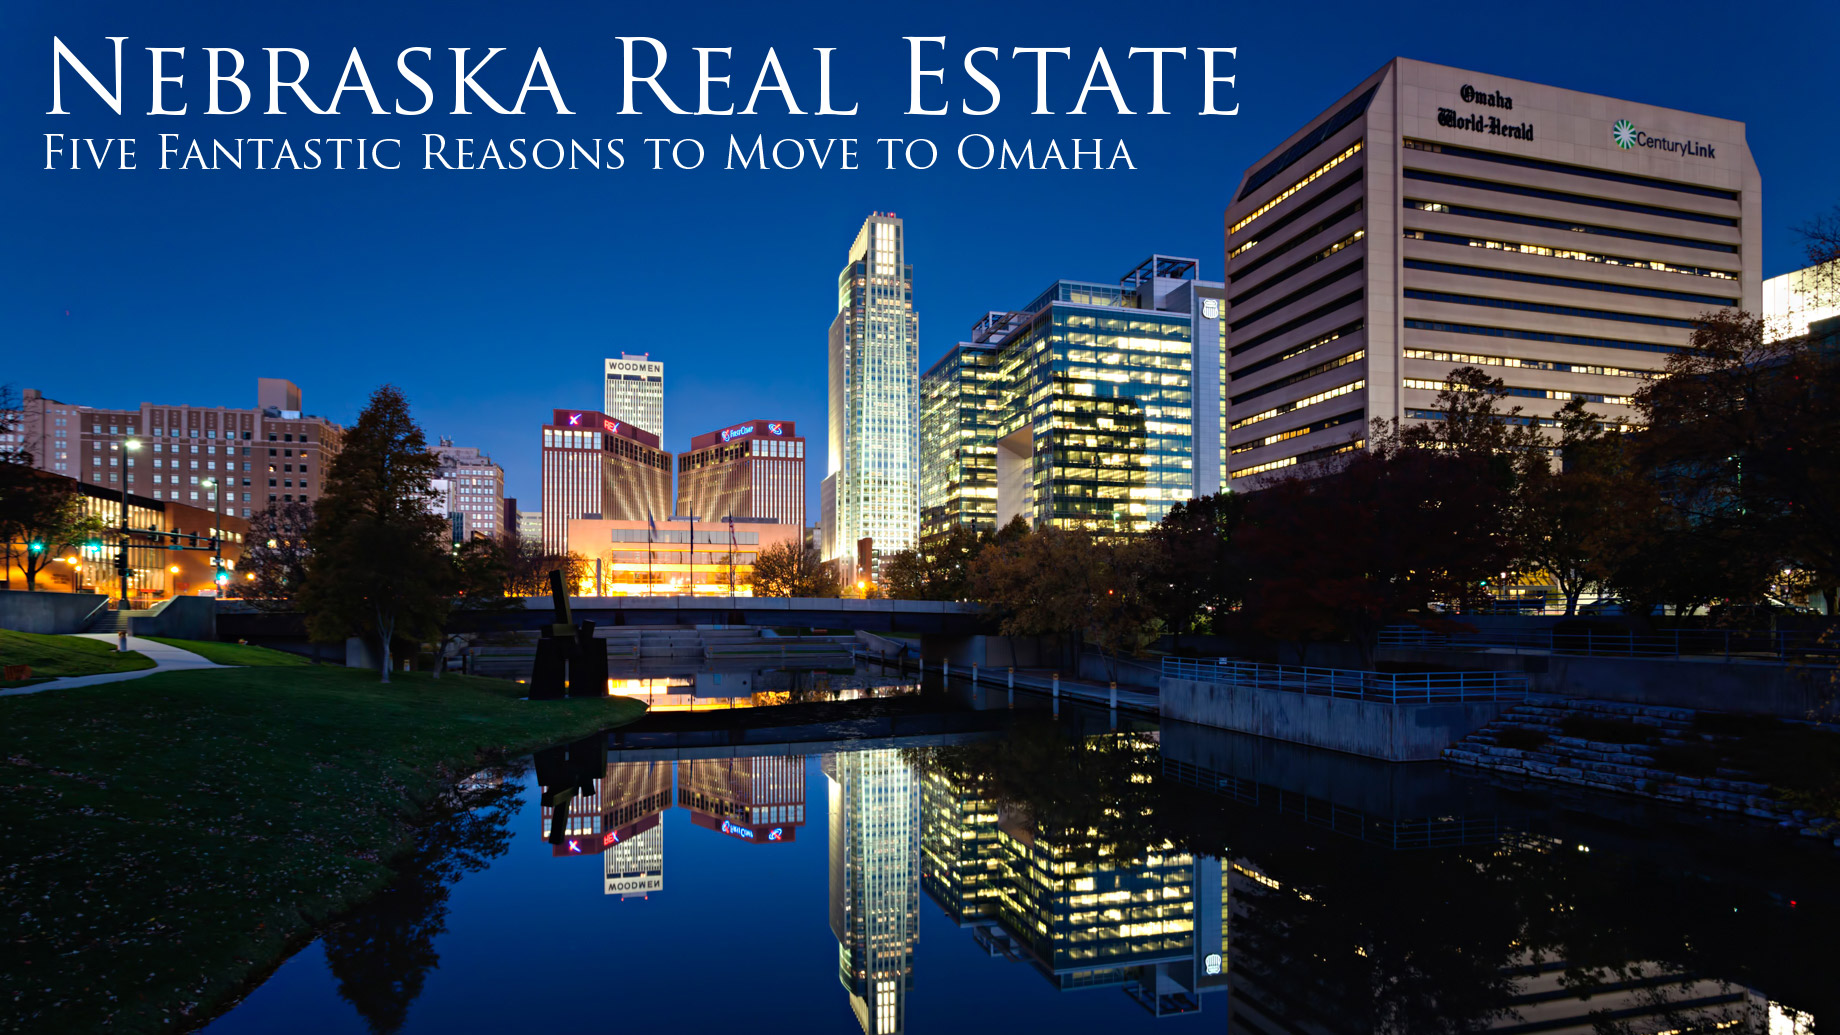 Nebraska Real Estate - Five Fantastic Reasons to Move to Omaha